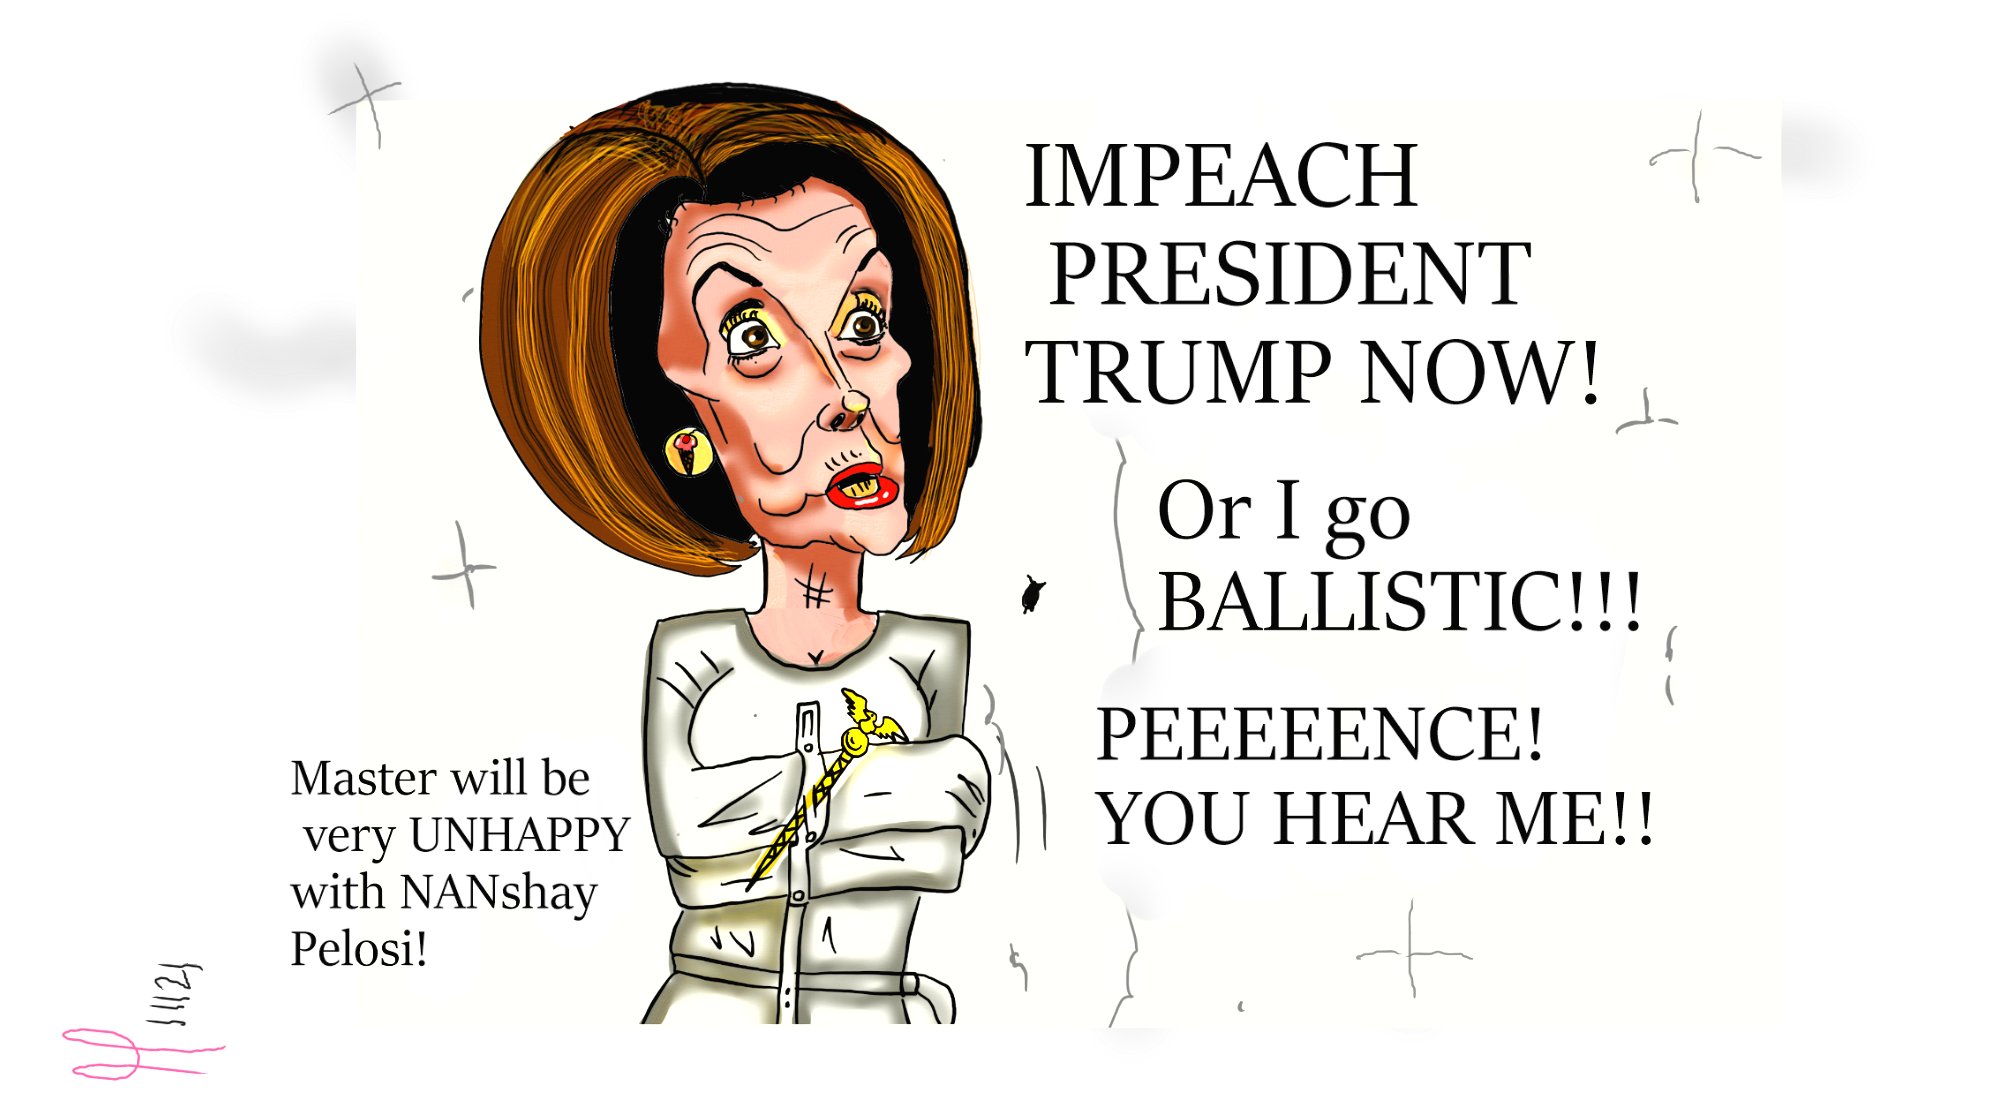 Nancy Pelosi 25th amendment political cartoon impeachment editorial for President Donald Trump post thumbnail image